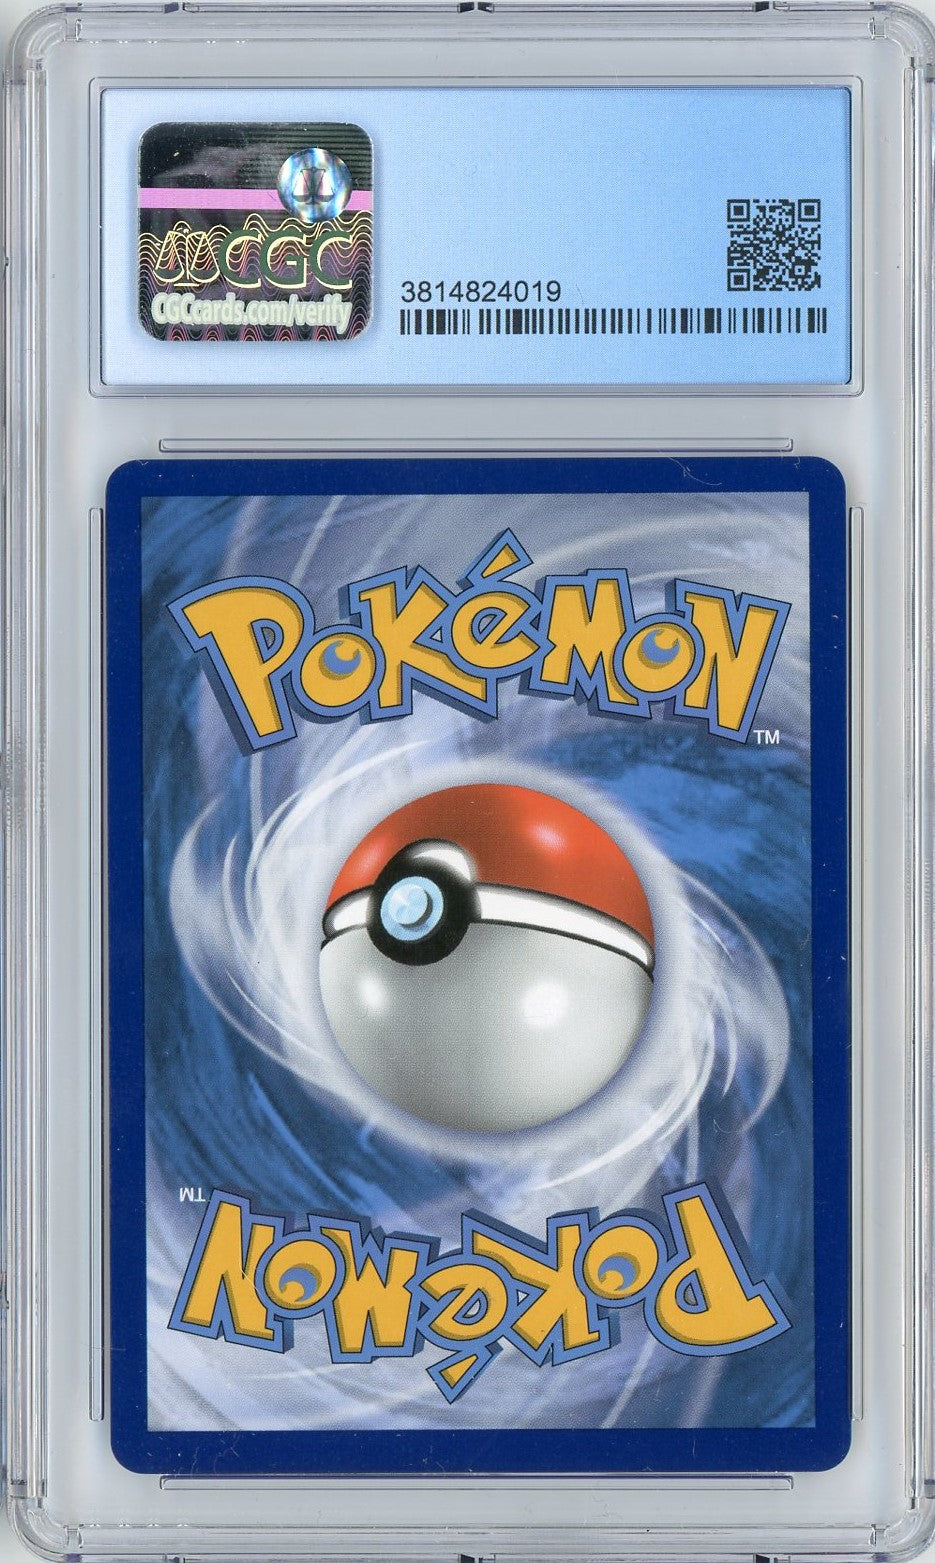 Check the actual price of your Ditto VMAX 051/072 Pokemon card